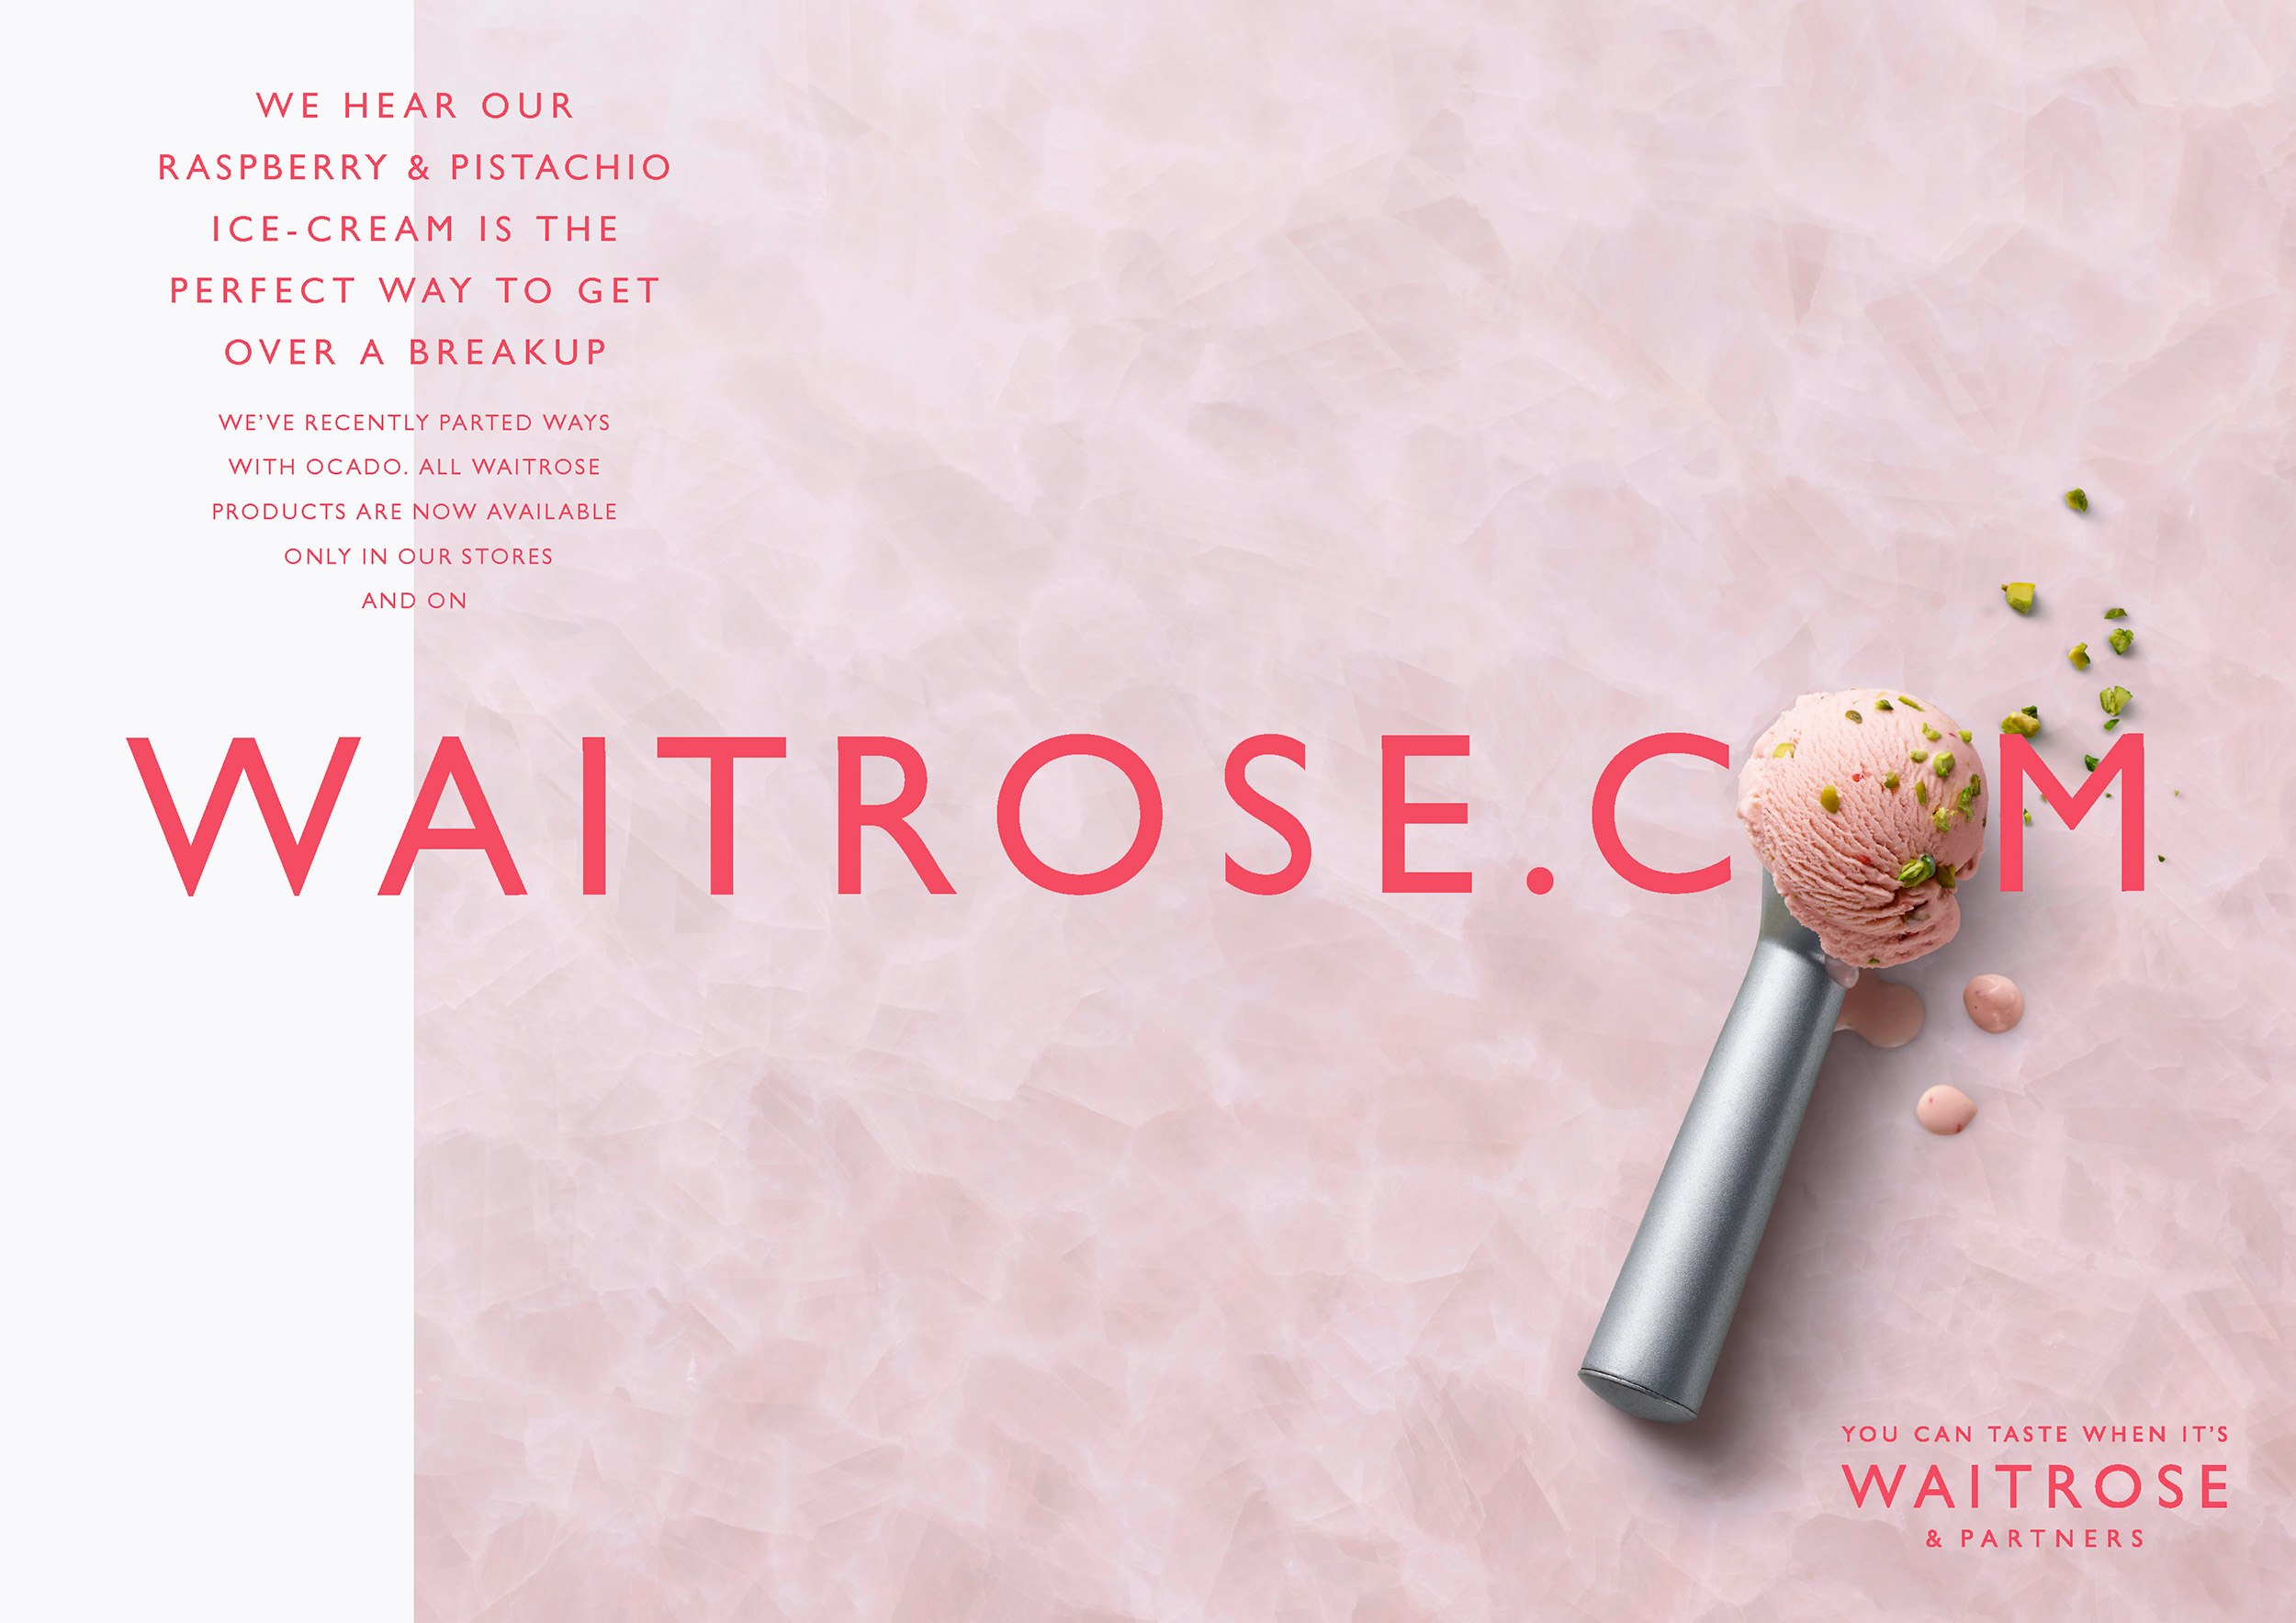 Waitrose-Ice-Cream-3-Colin-Campbell